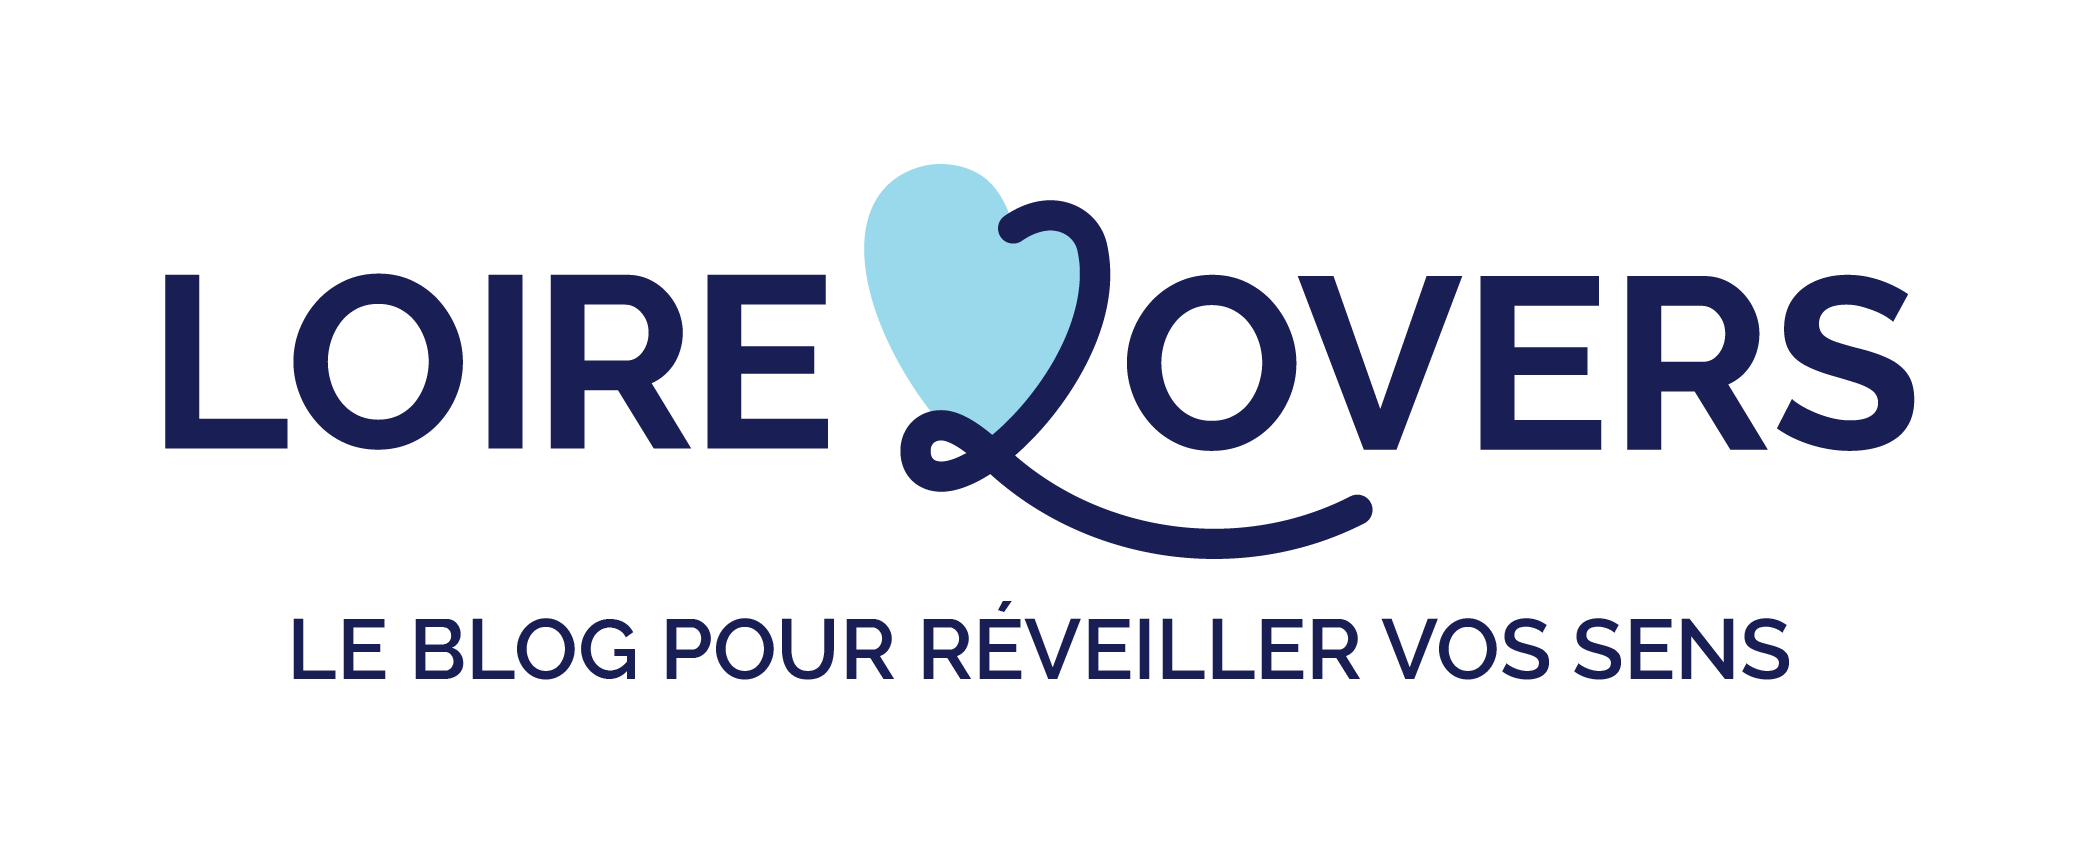 Blog voyage Loire Lovers Logos